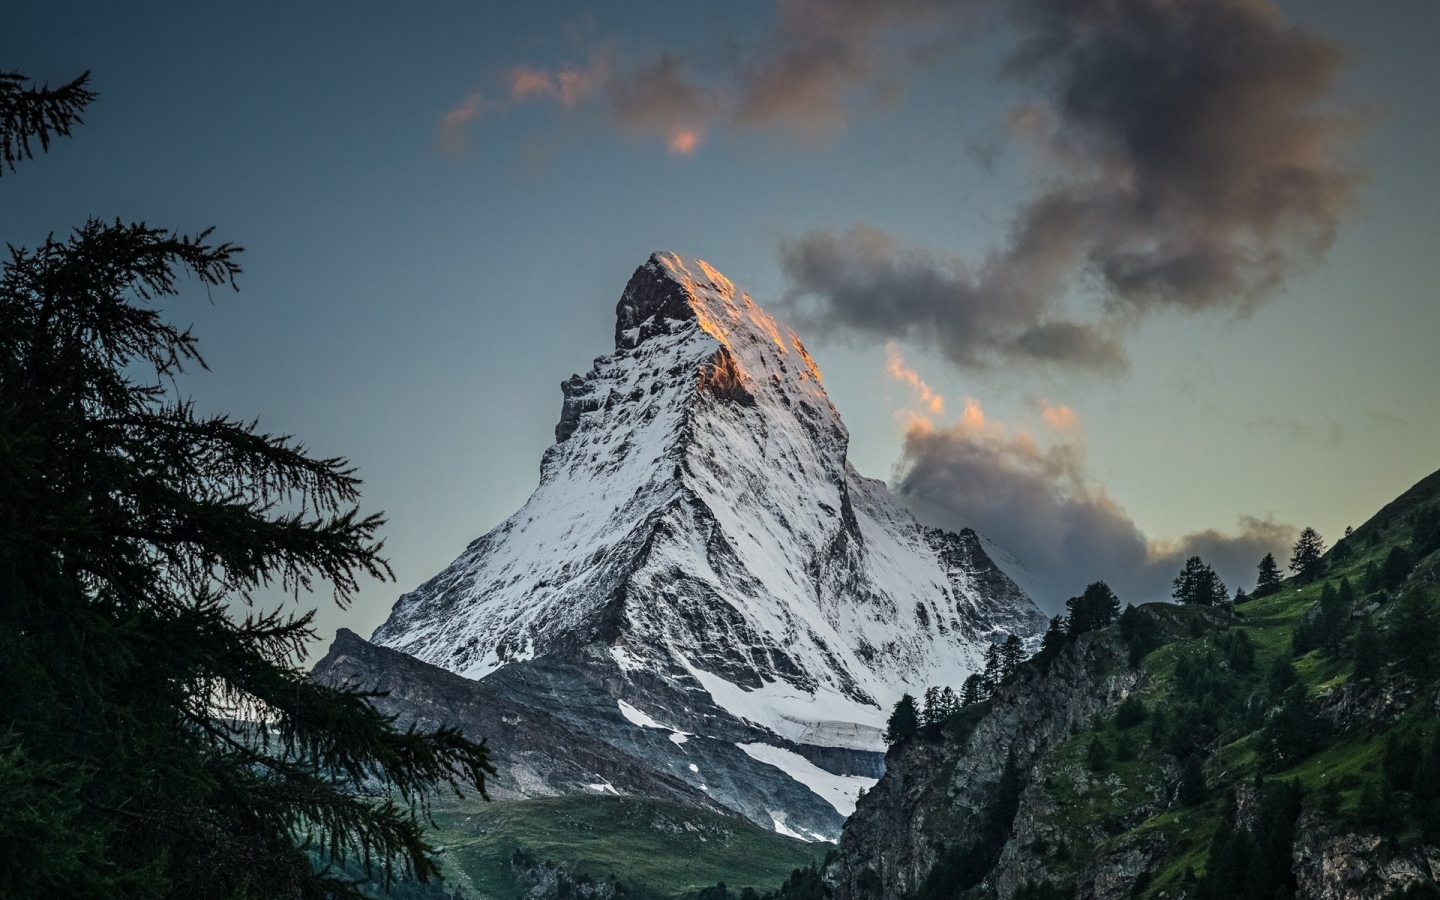 Amazing Mountain Peak for 1440 x 900 widescreen resolution